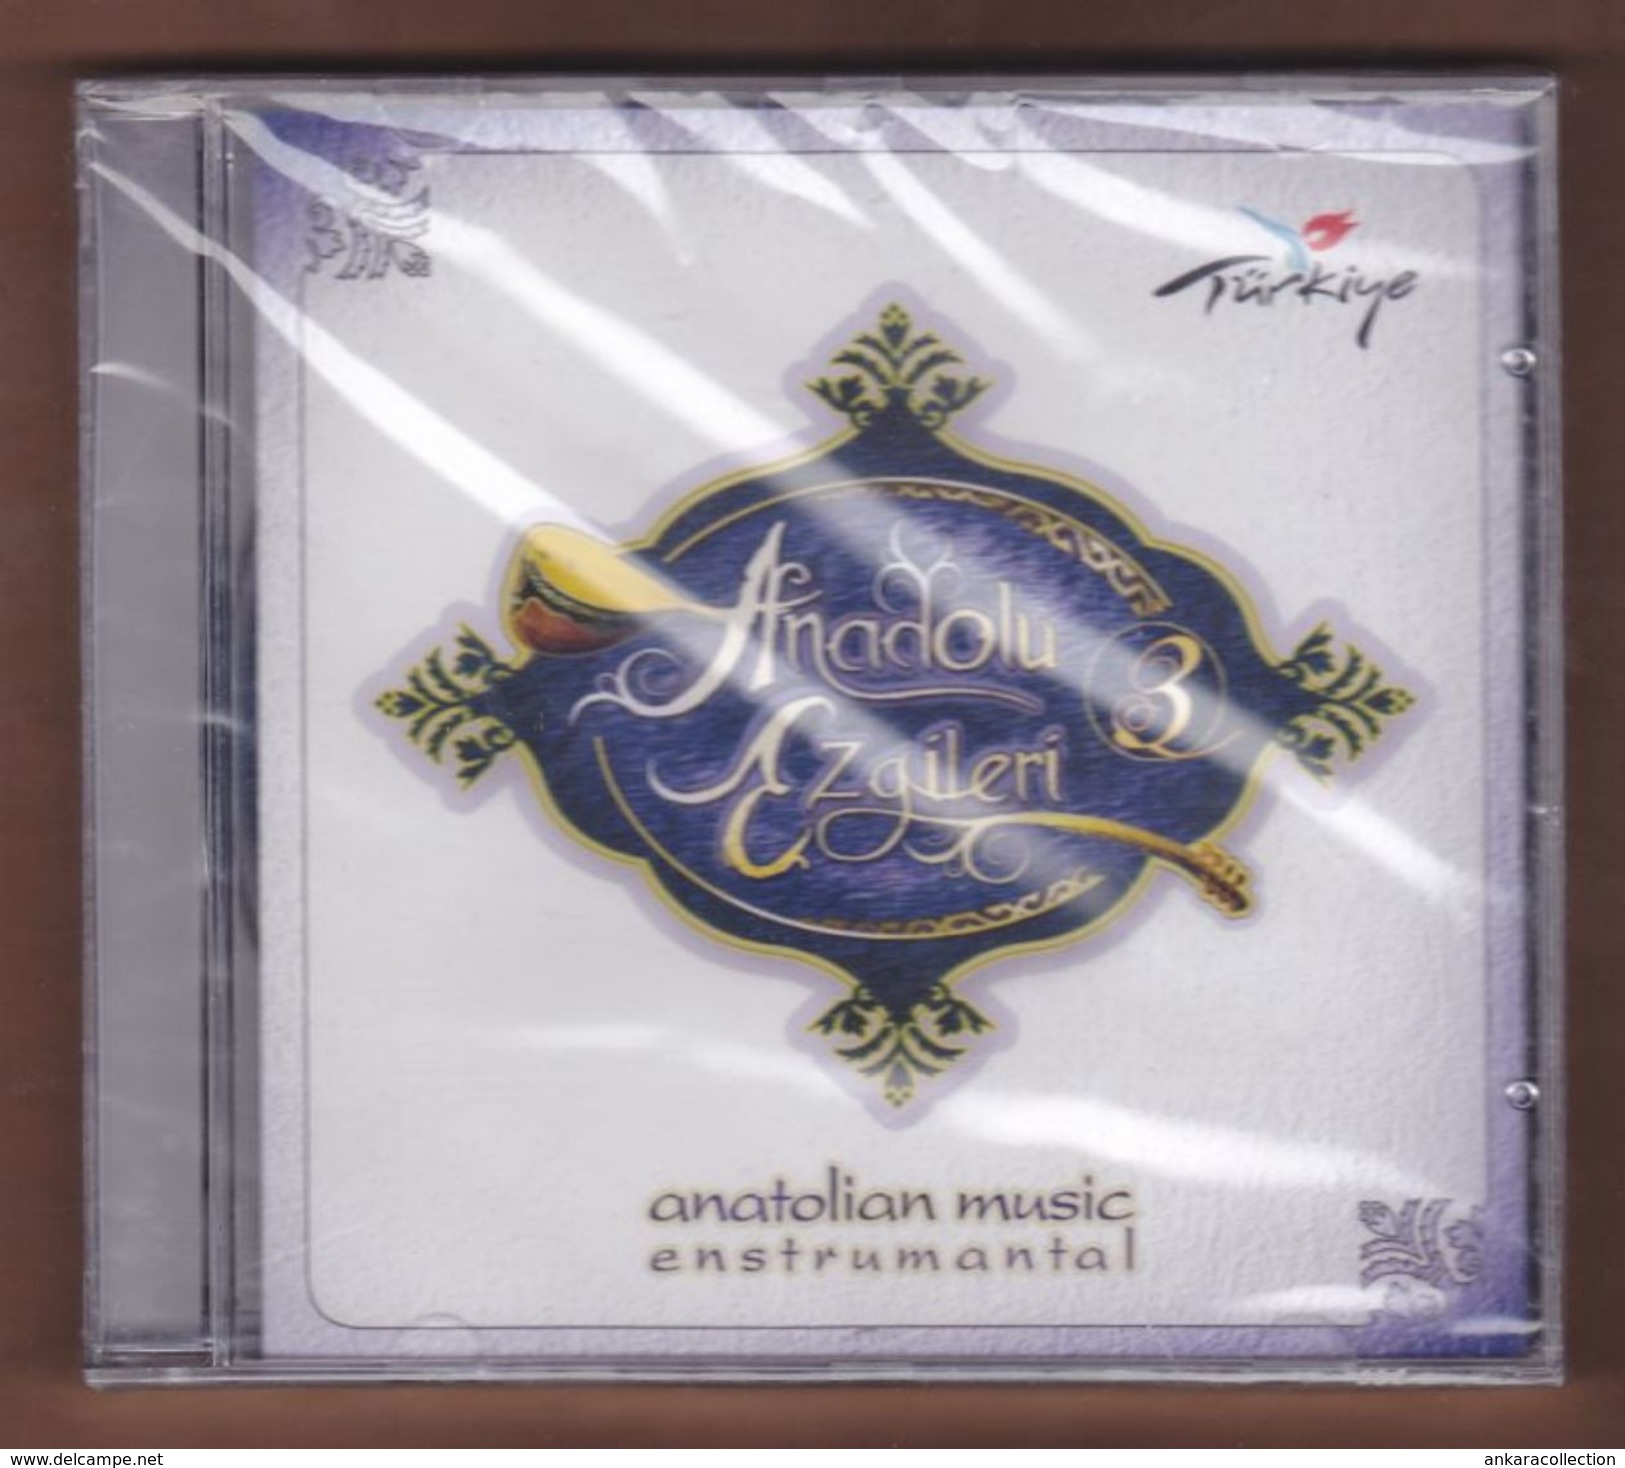 AC -  Anadolu Ezgileri 3 Anatolian Music Enstrumental BRAND NEW TURKISH MUSIC CD - World Music